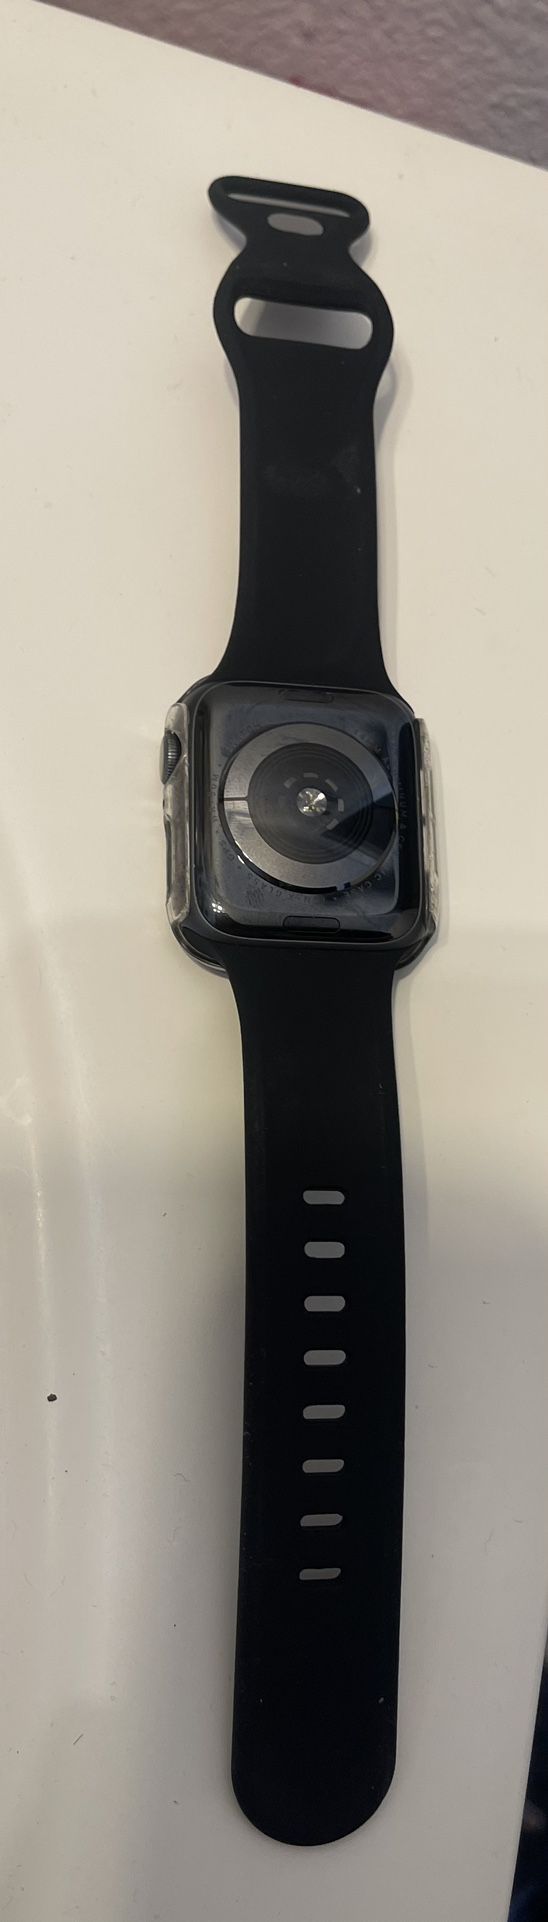 Apple Series 4 44mm Watch 